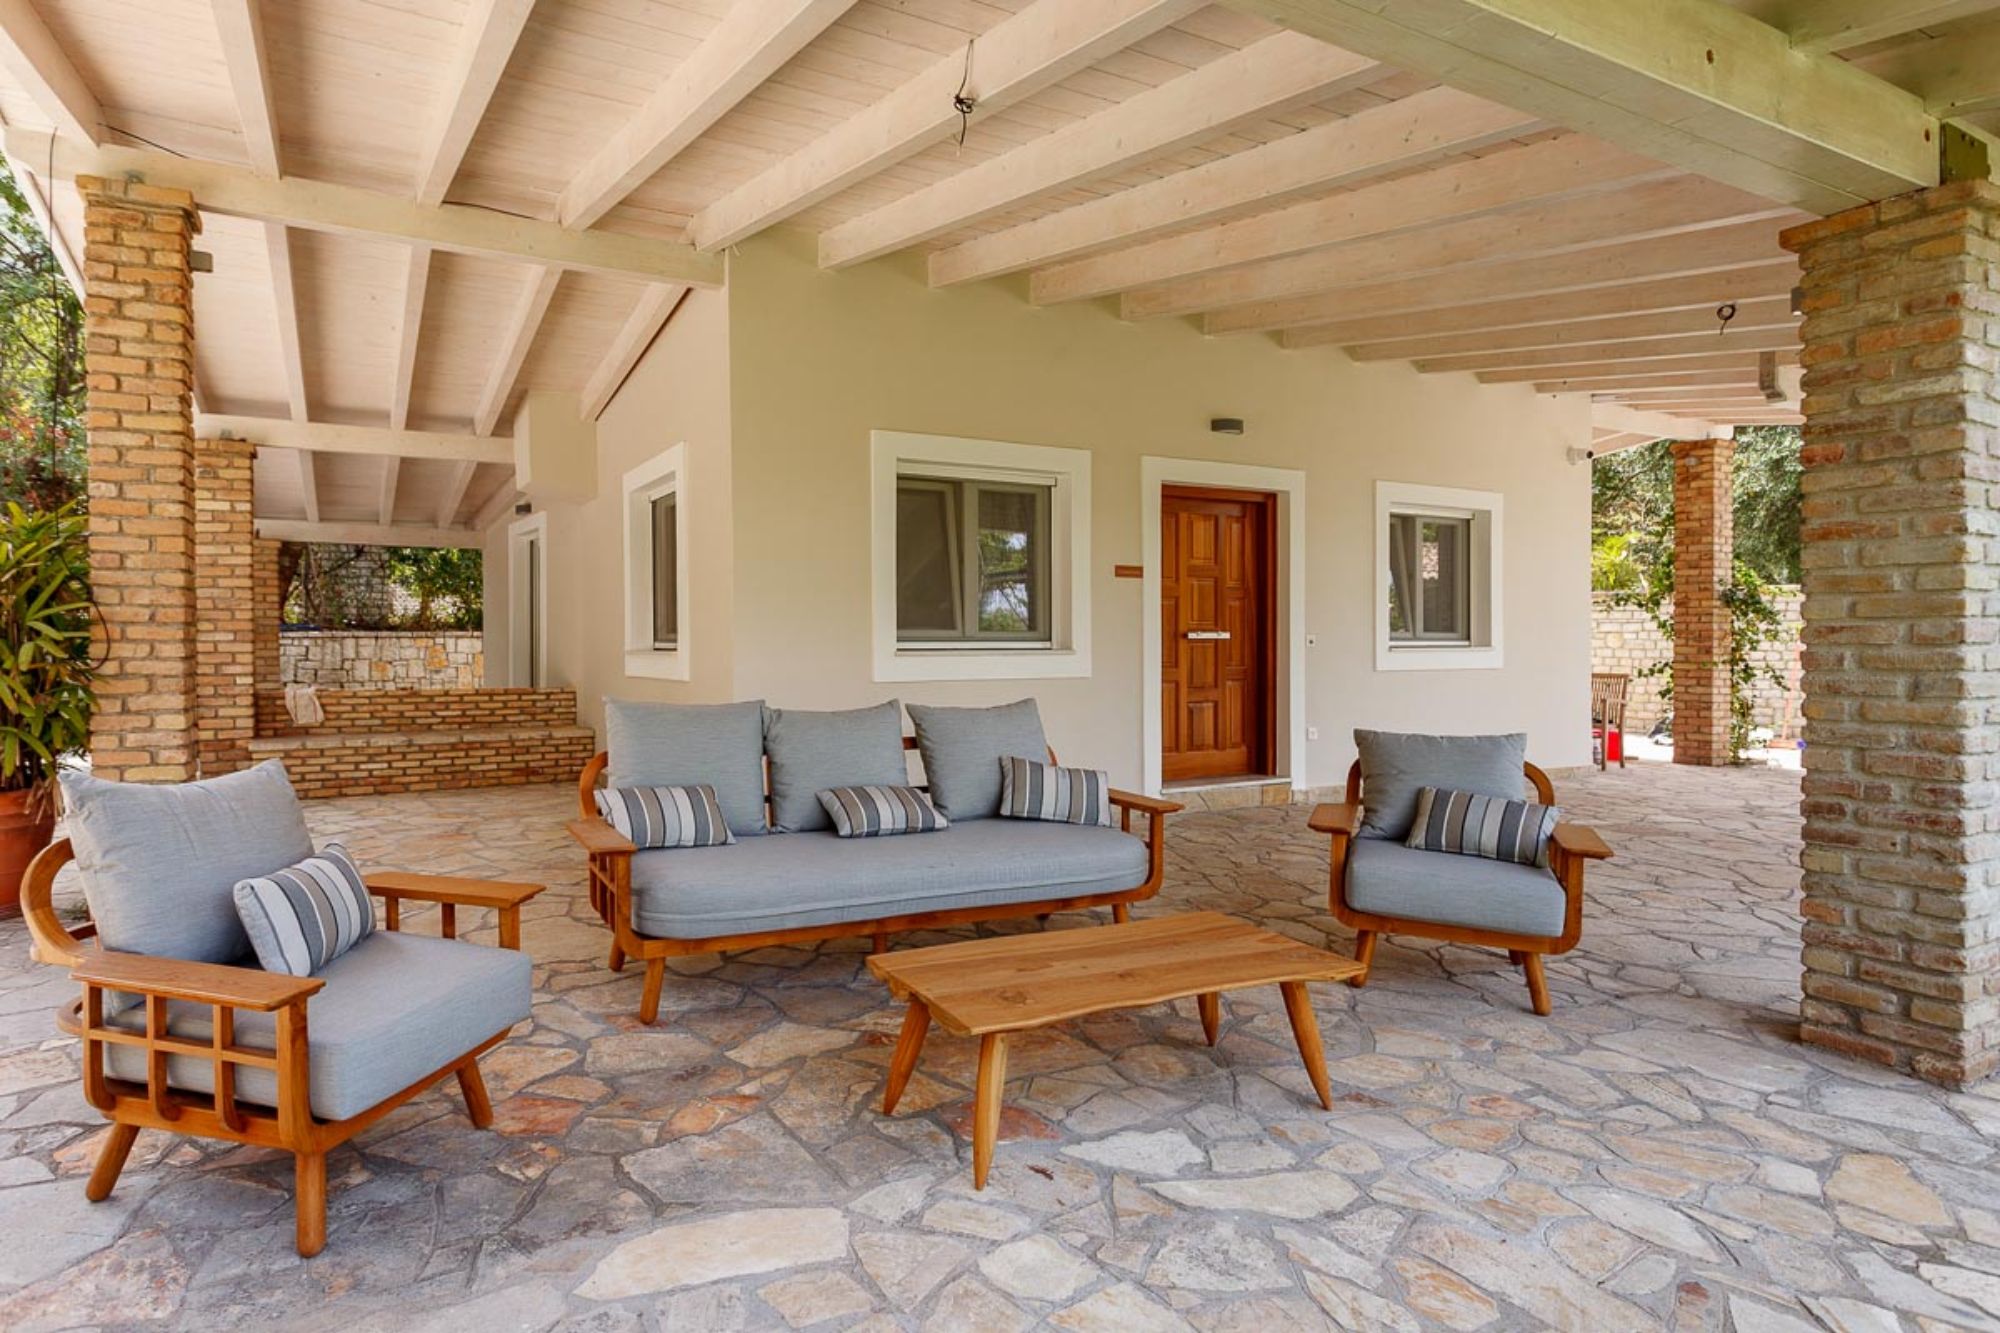 Outdoor seating area at Villa Paralia